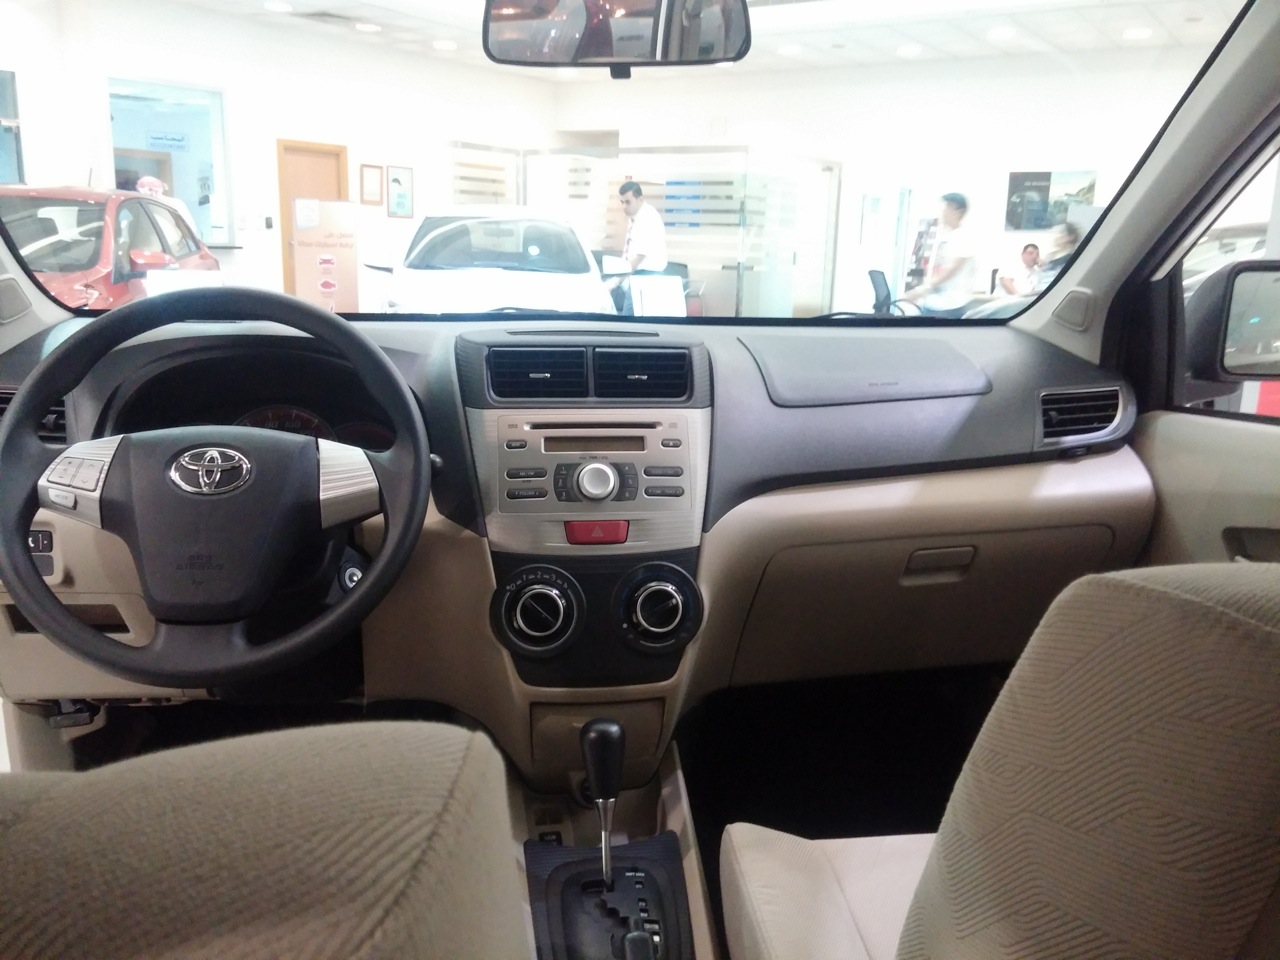 Toyota Avanza dashboard launched in UAE